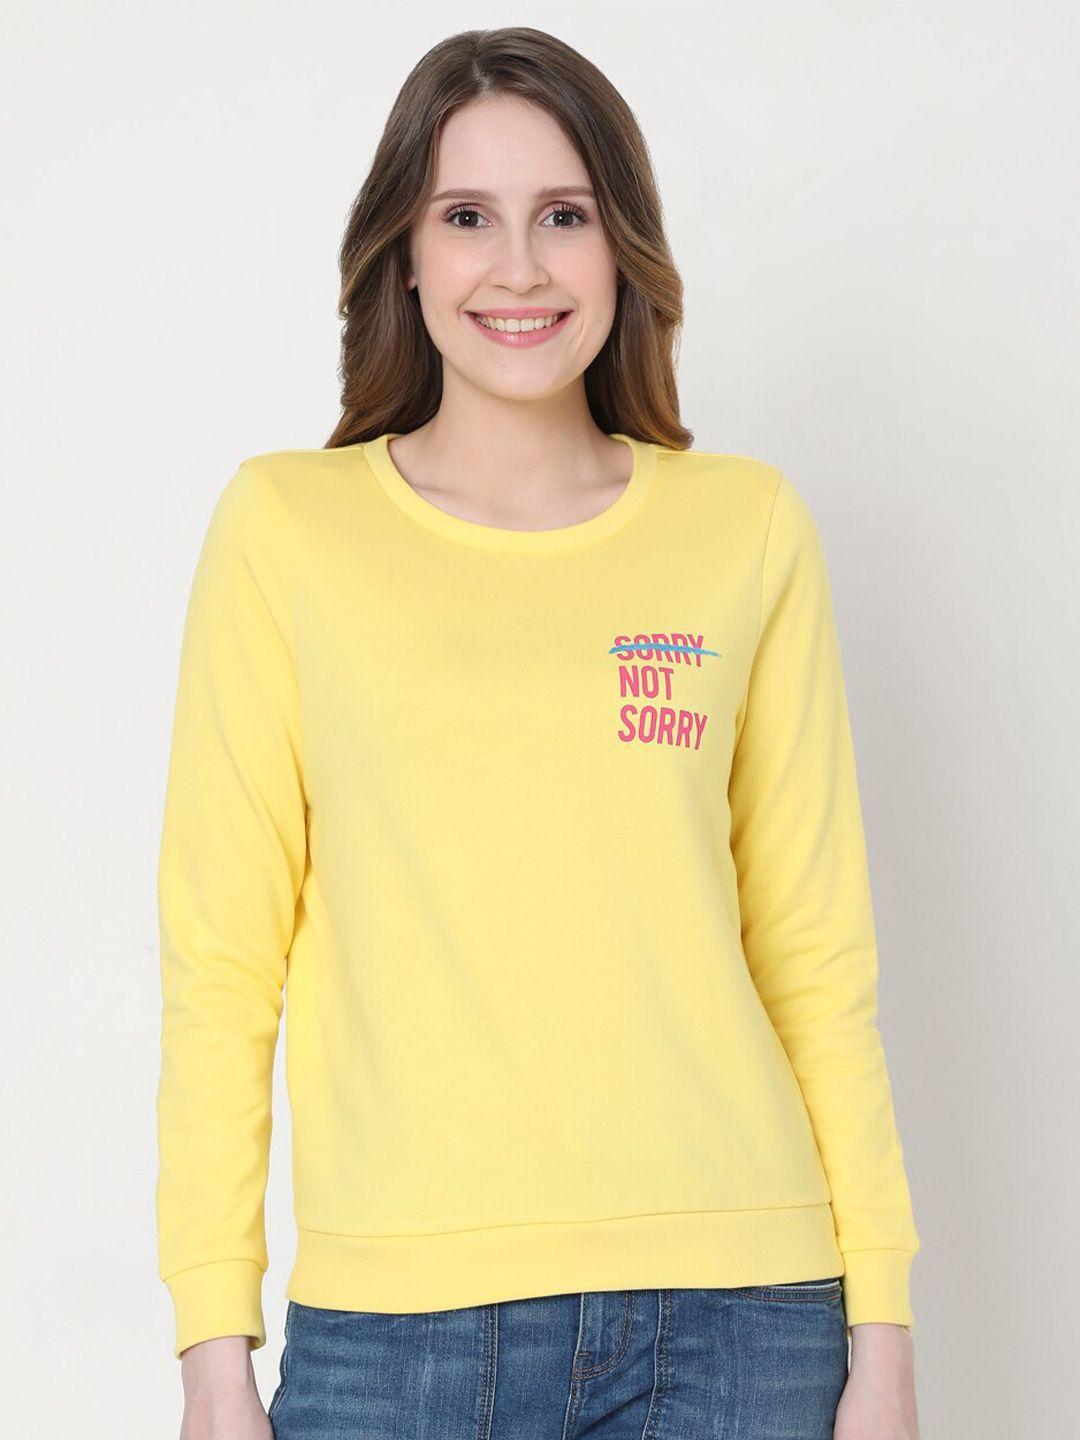 vero moda women yellow printed cotton sweatshirt